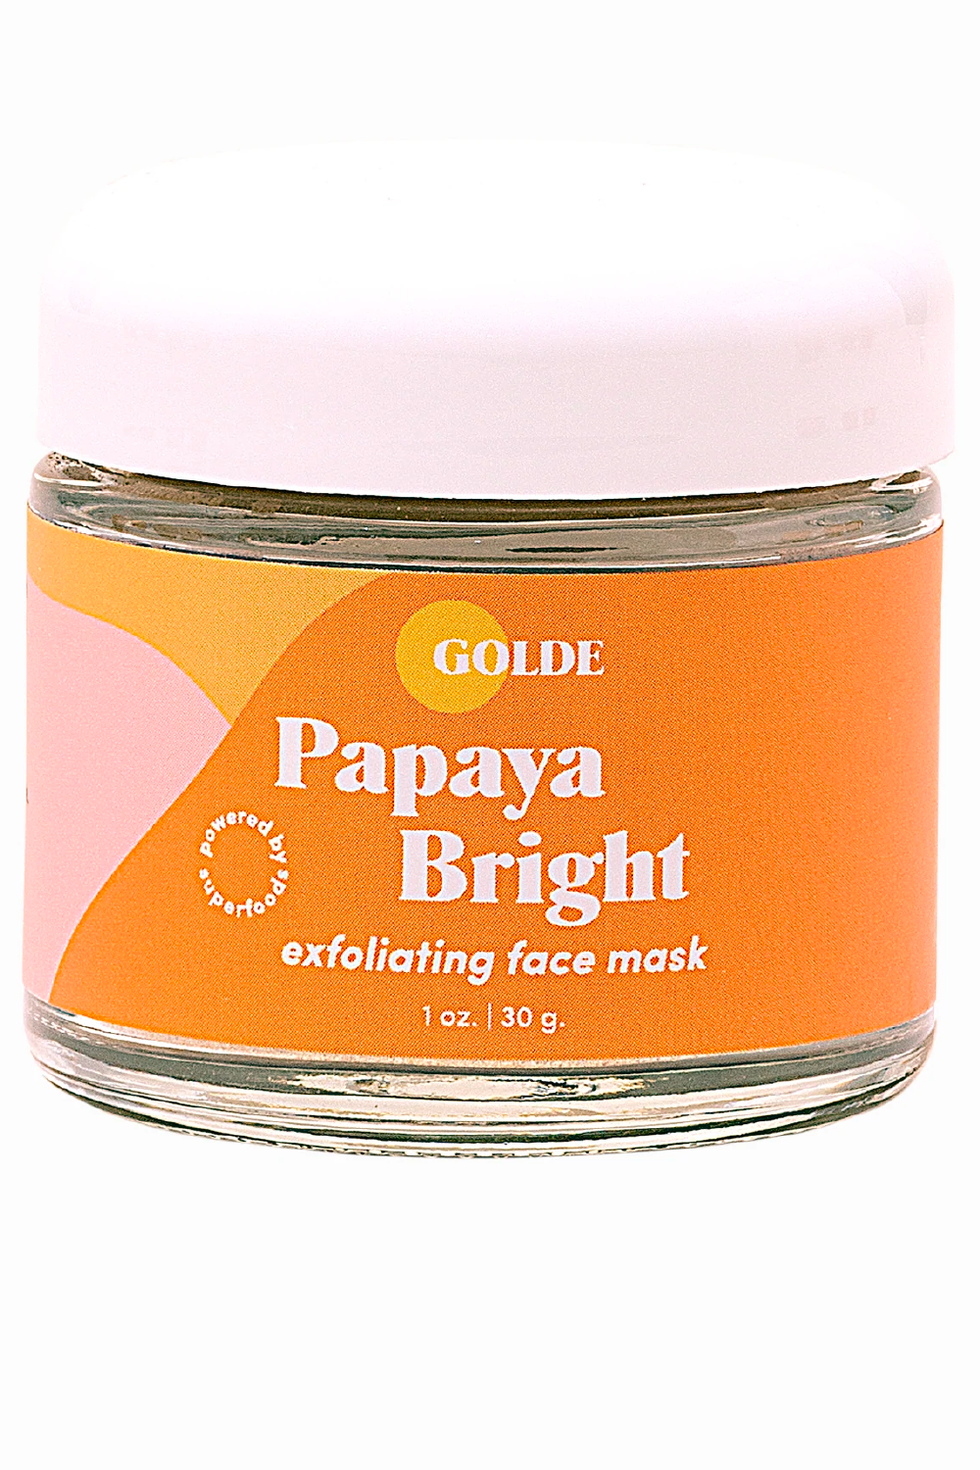 Golde Papaya Bright Face Mask